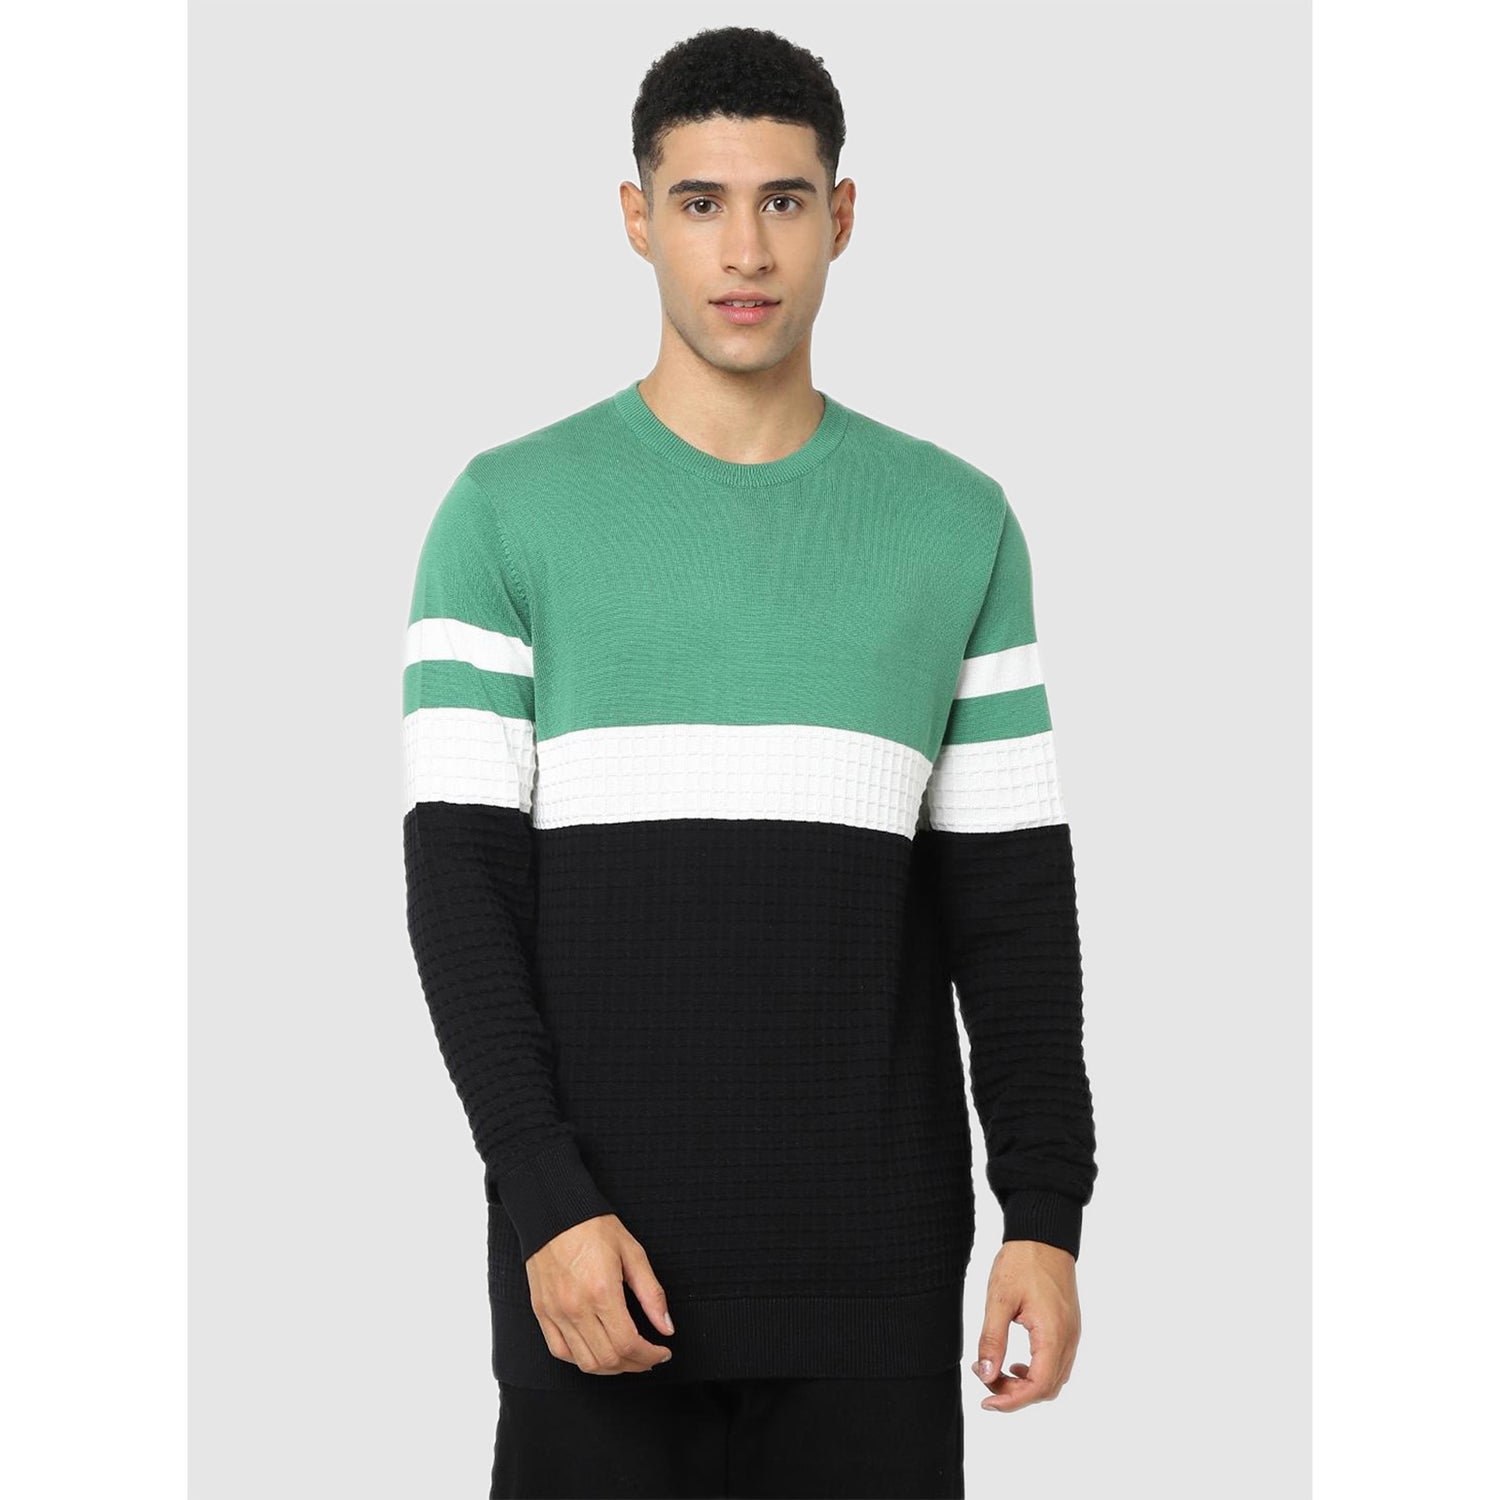 Black Color Regular Fit Block Sweater (Various Sizes)